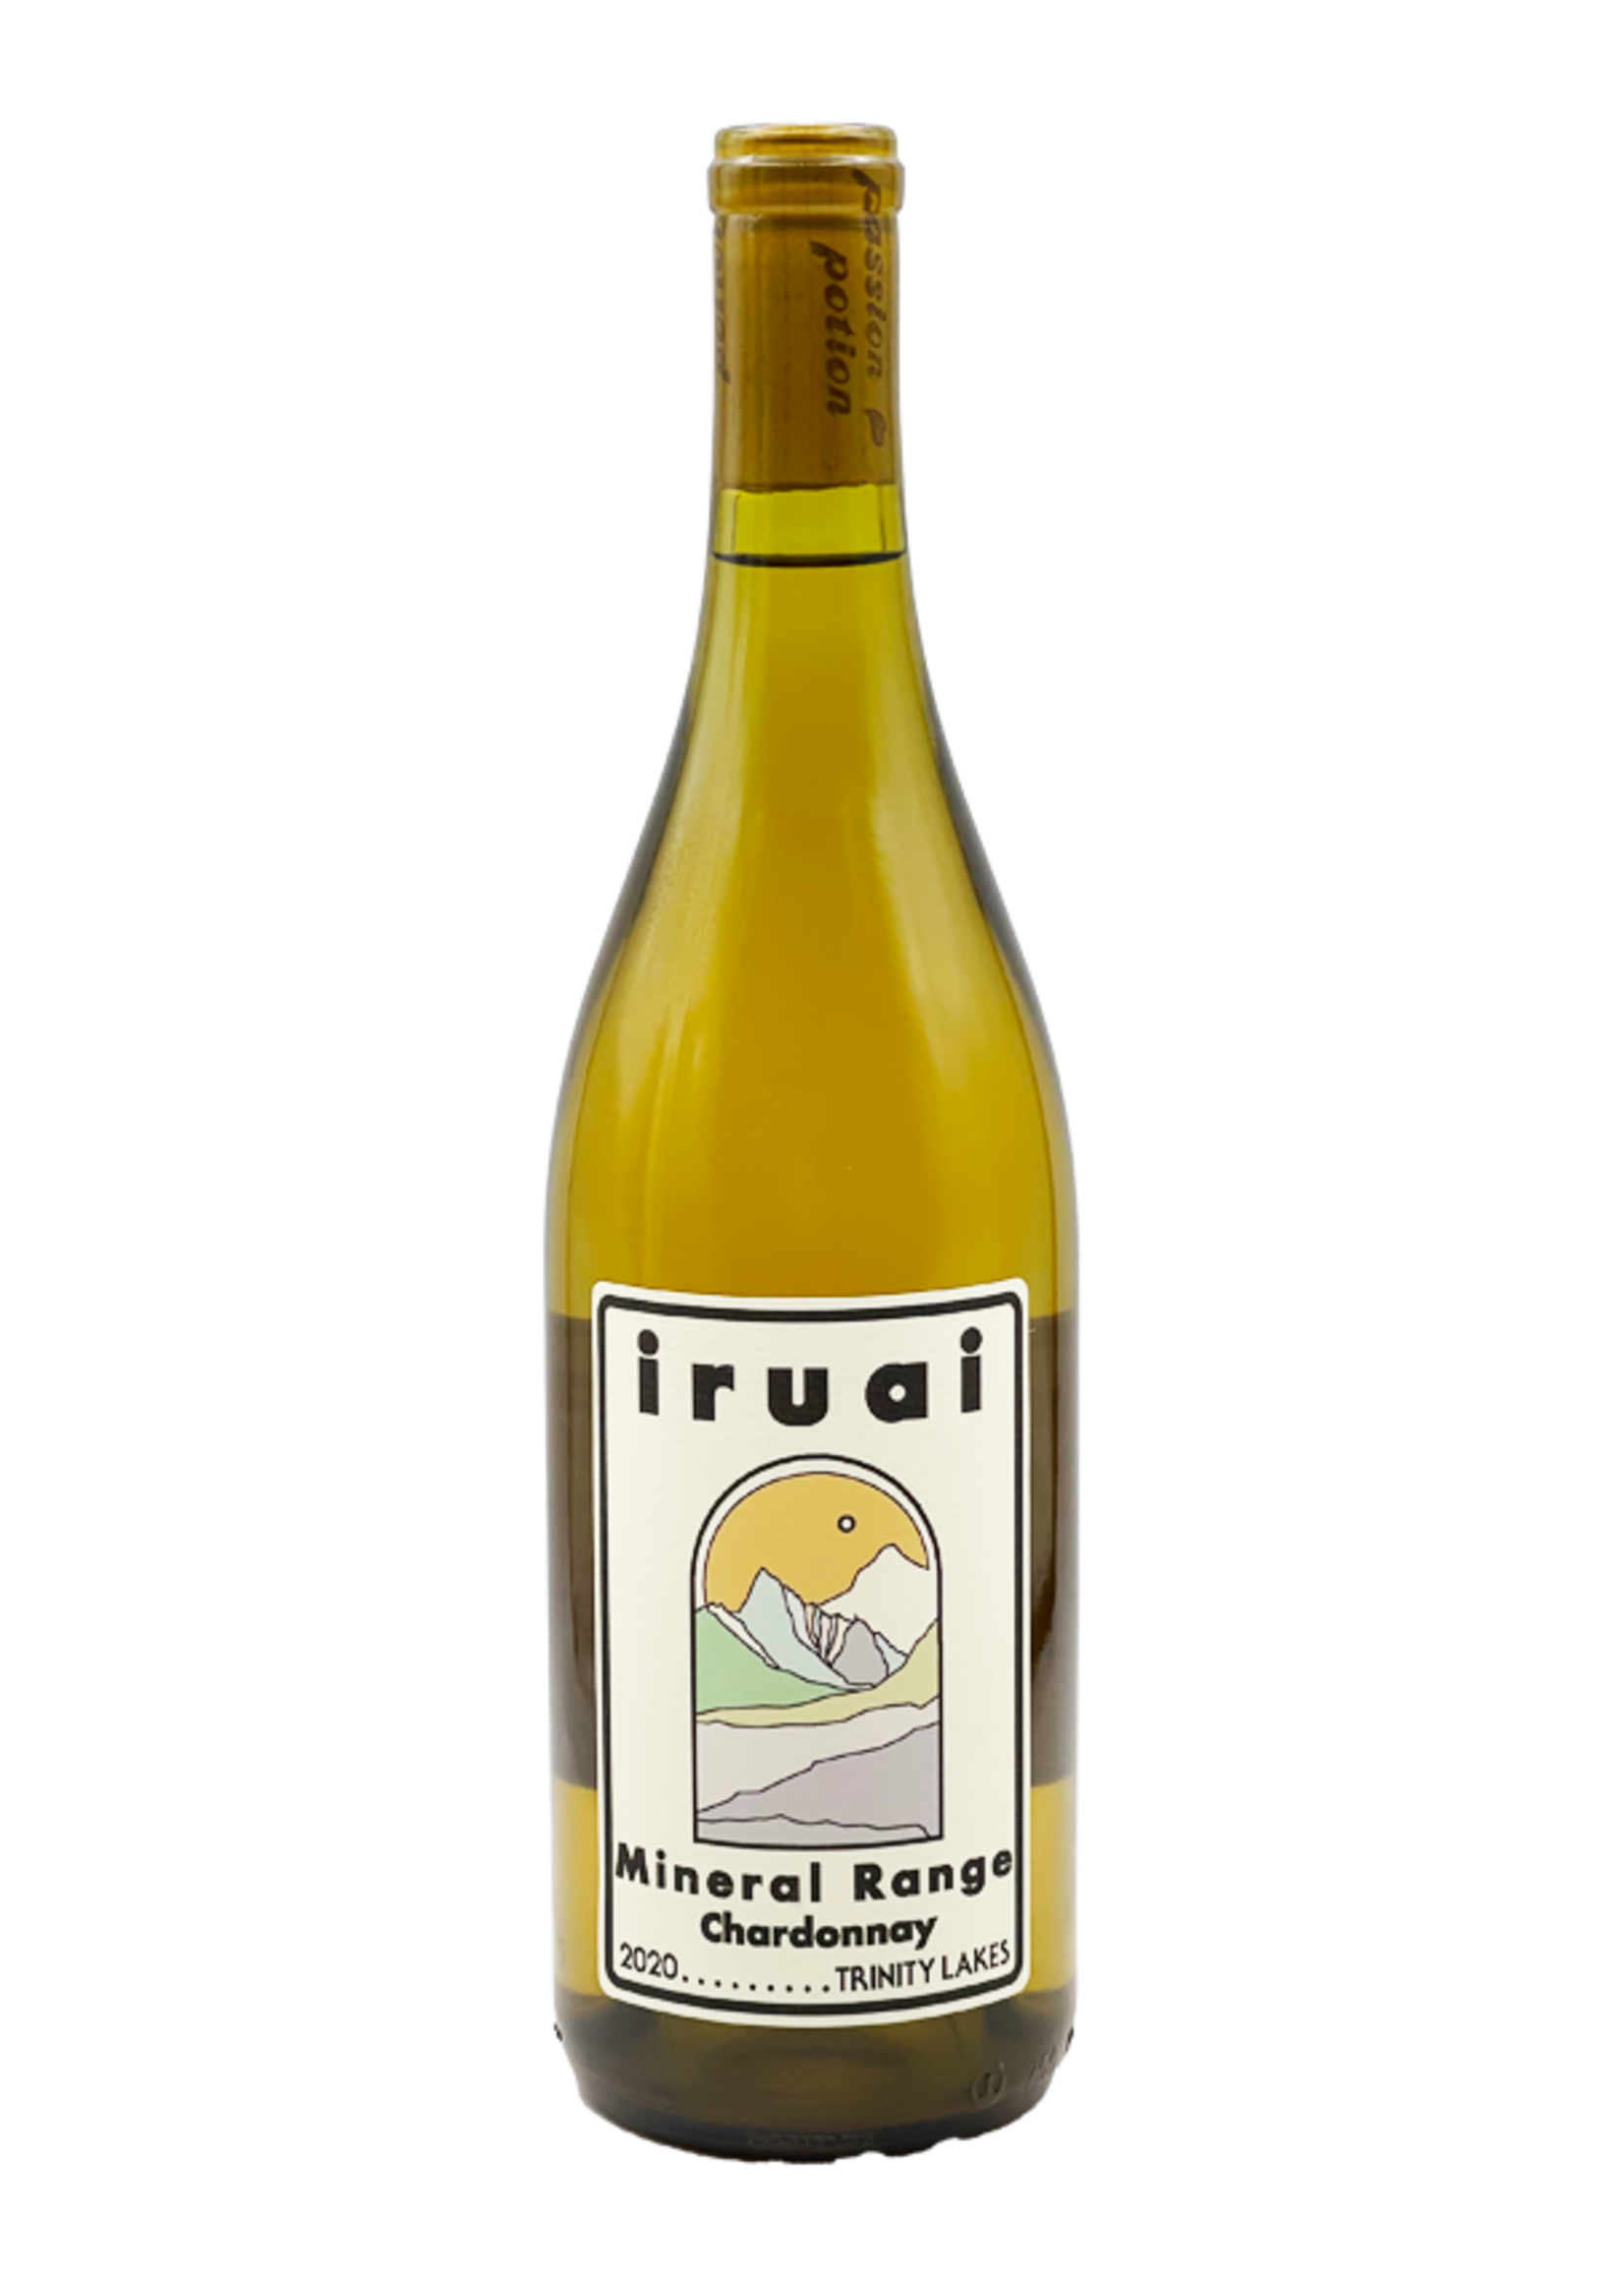 Iruai Mineral Range Chardonnay 2020 Iruai